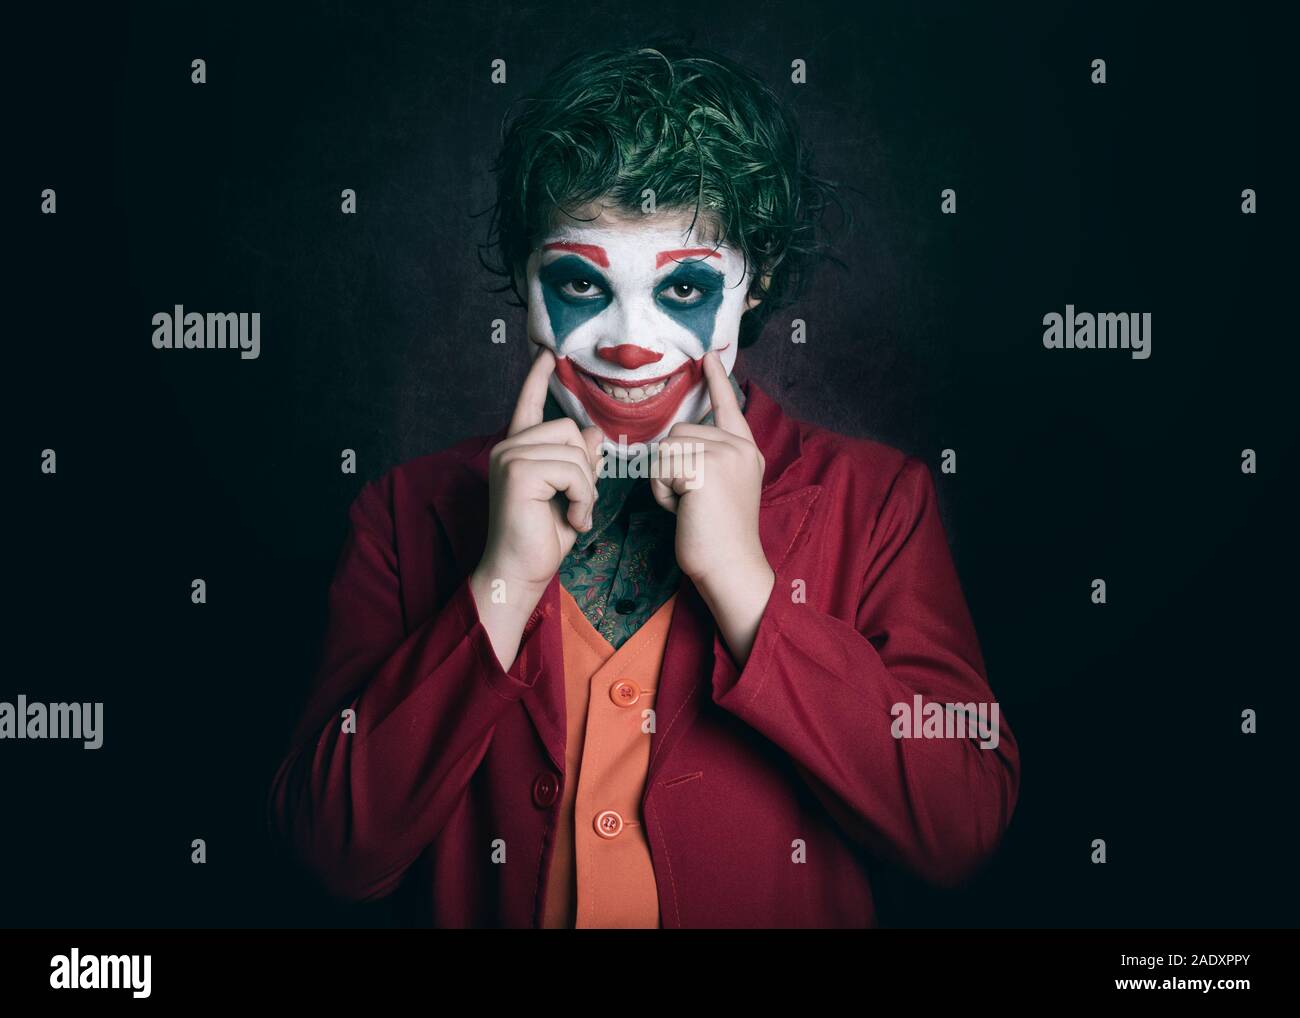 boy dressed as Joker on dark background Stock Photo